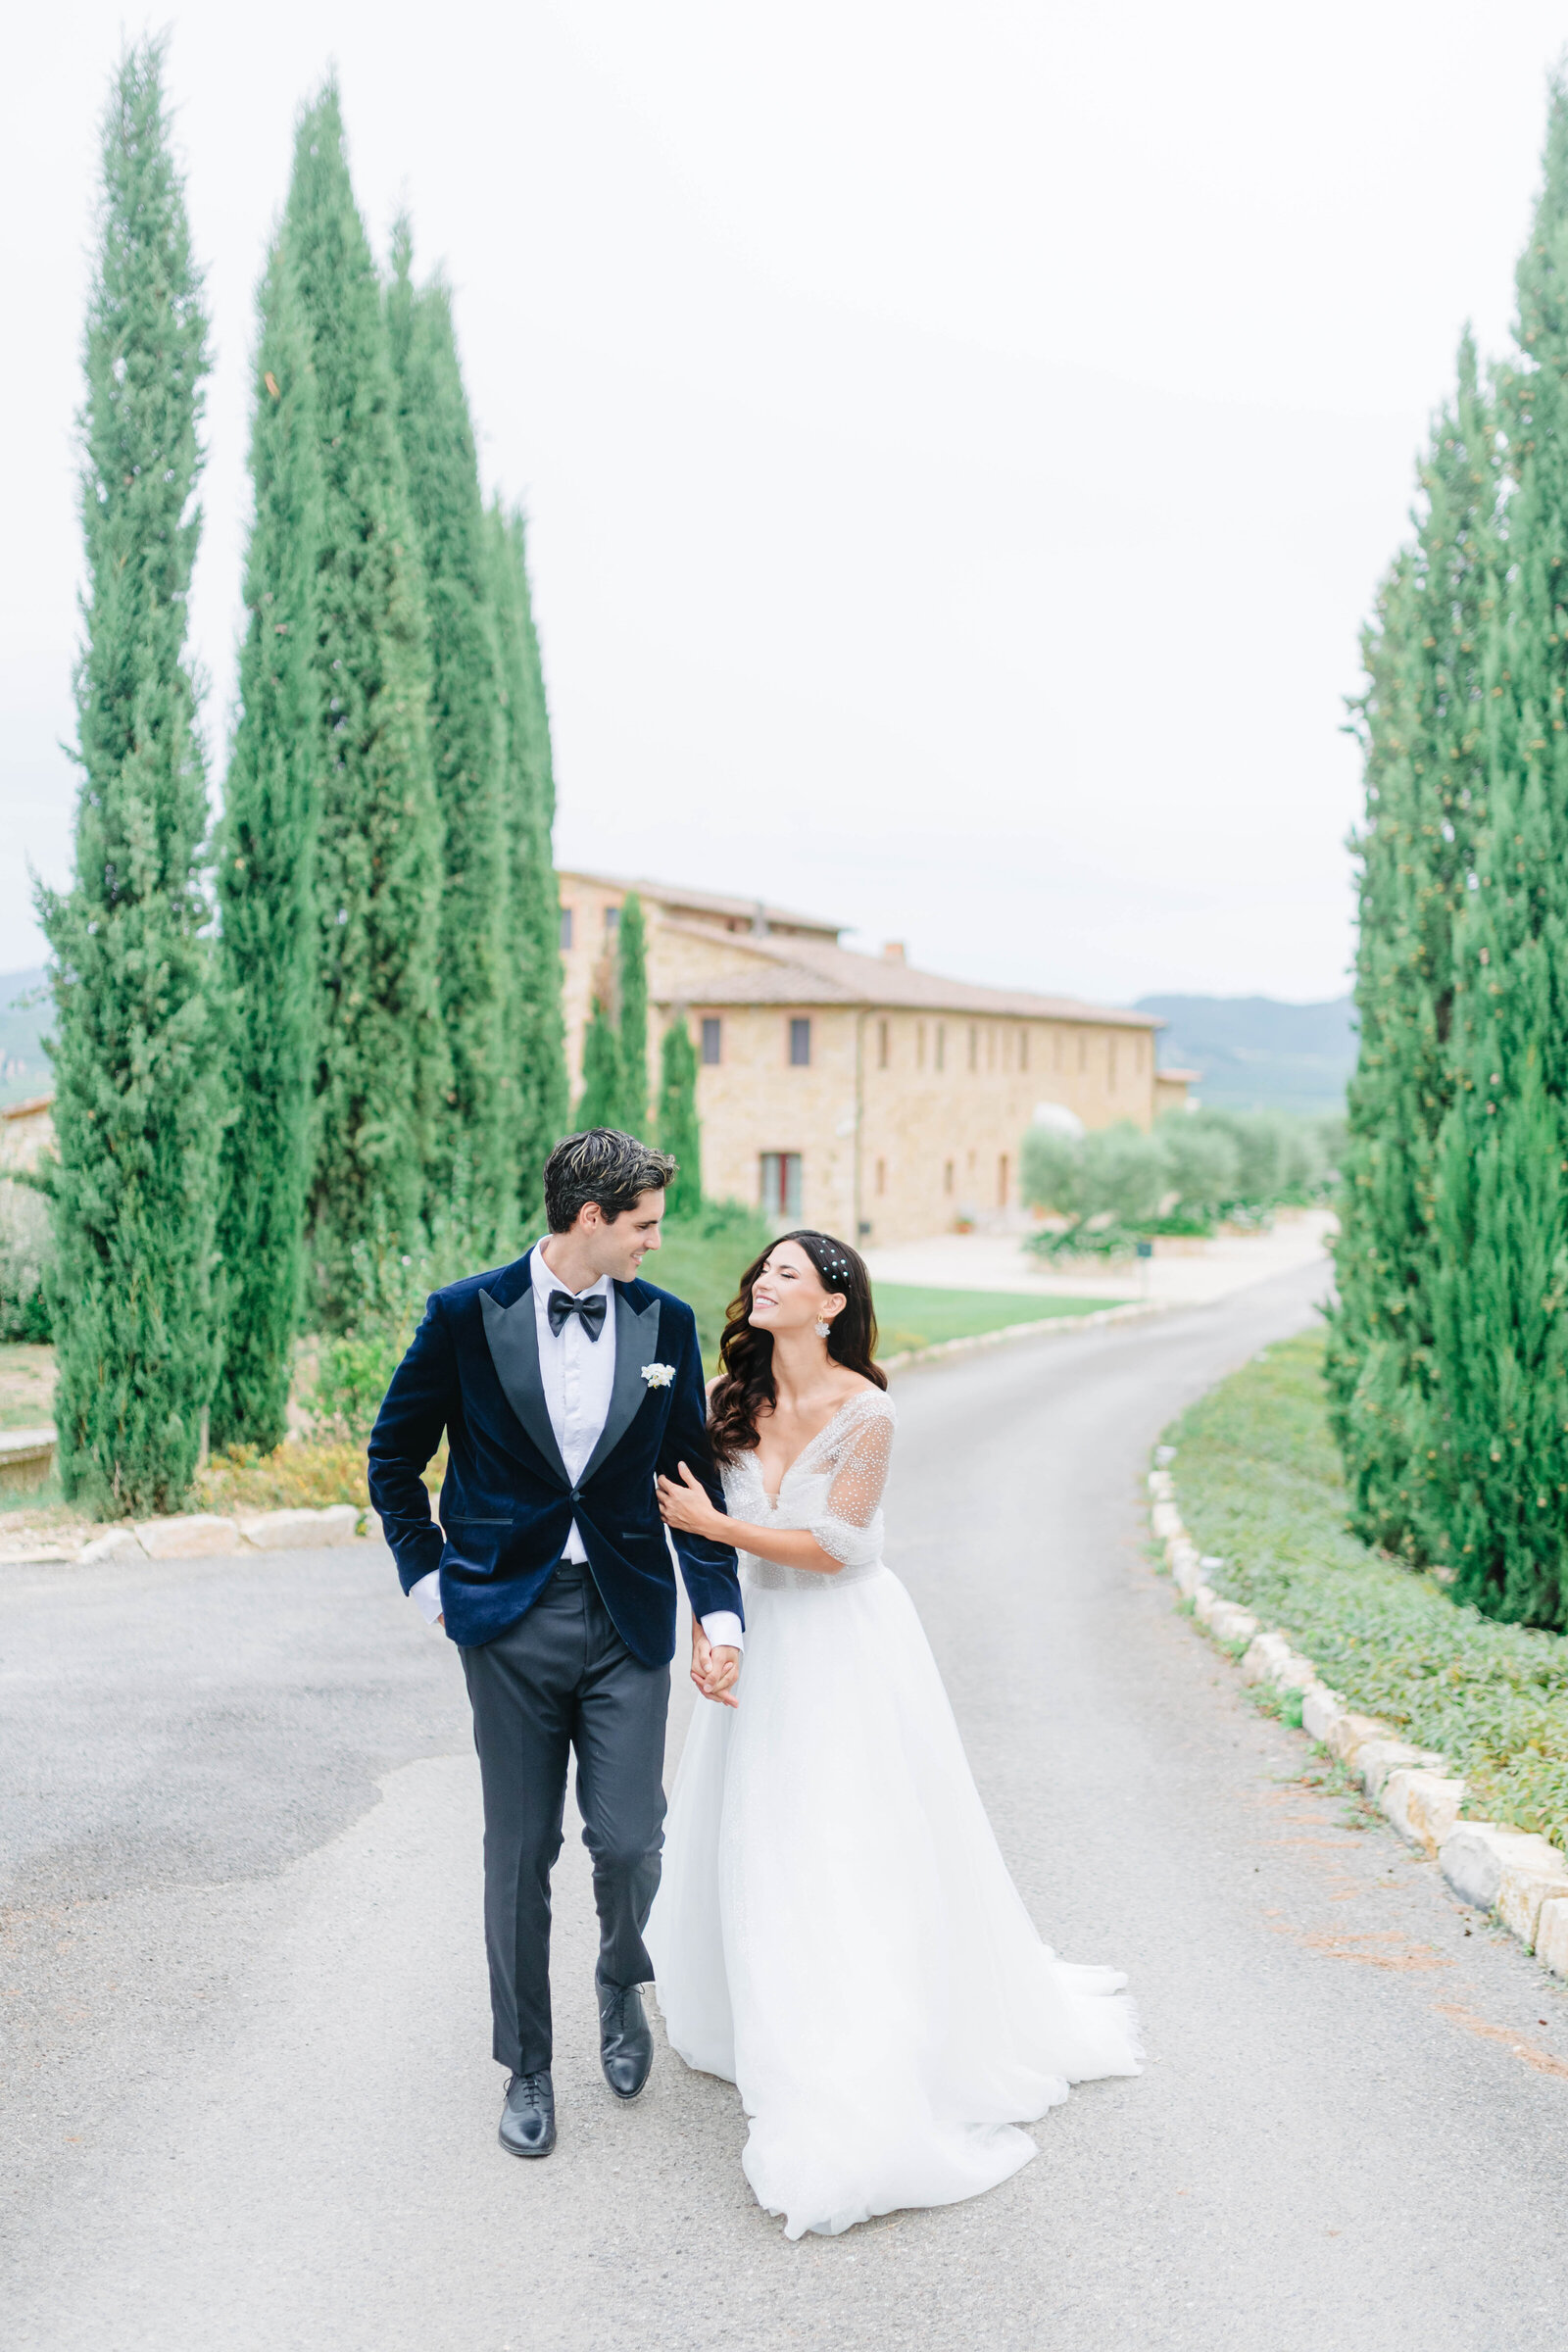 MorganeBallPhotography-Wedding-Tuscany-TheClubHouse-LovelyInstants-03-WeddingCeremony-couple-lq-13-3797